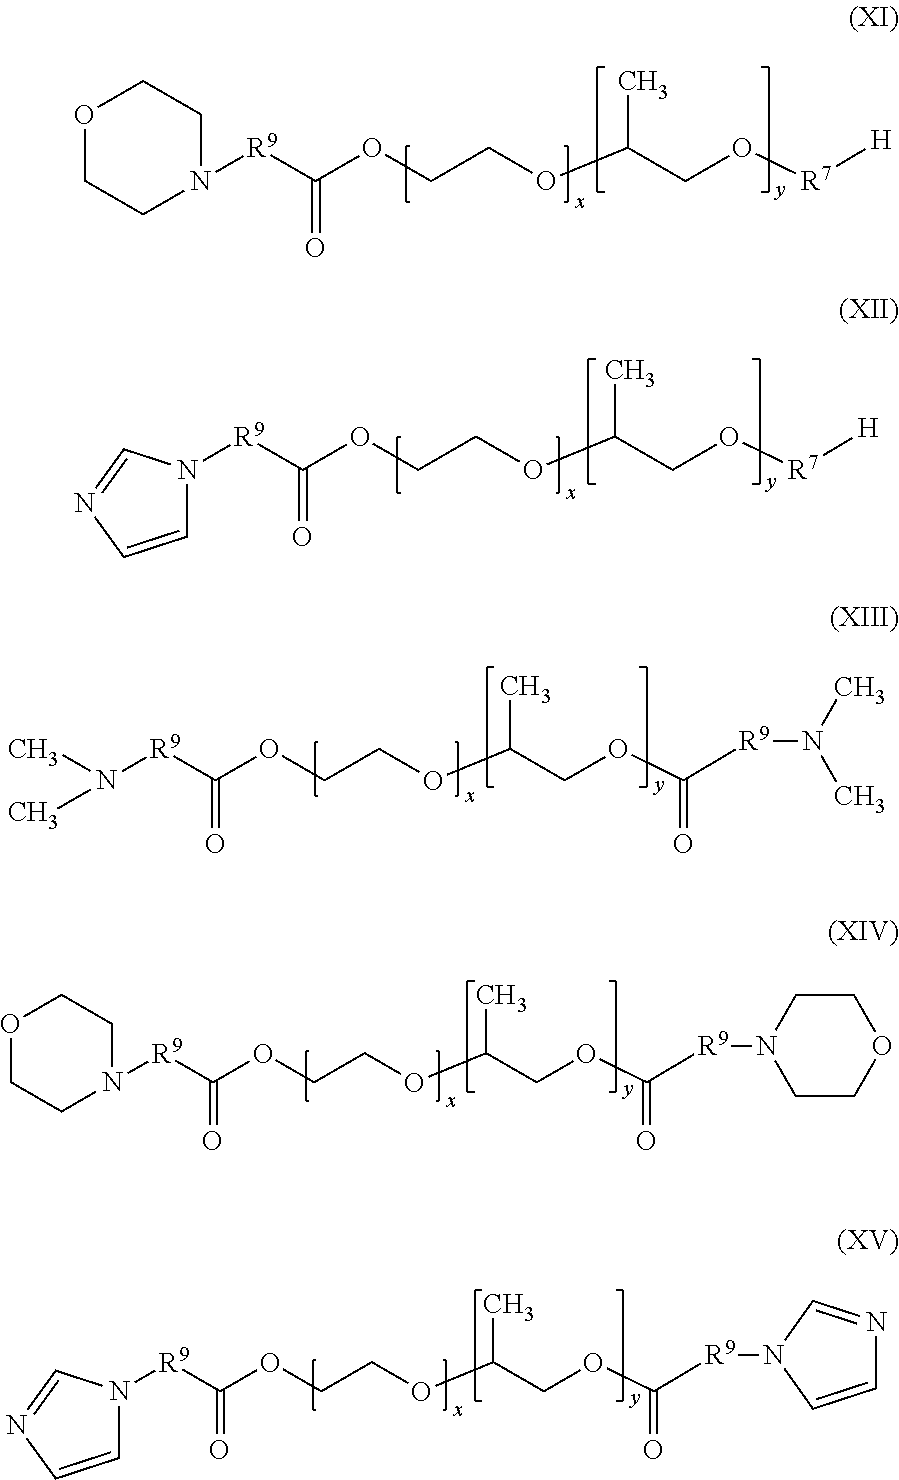 Preparation of isocyanato silanes